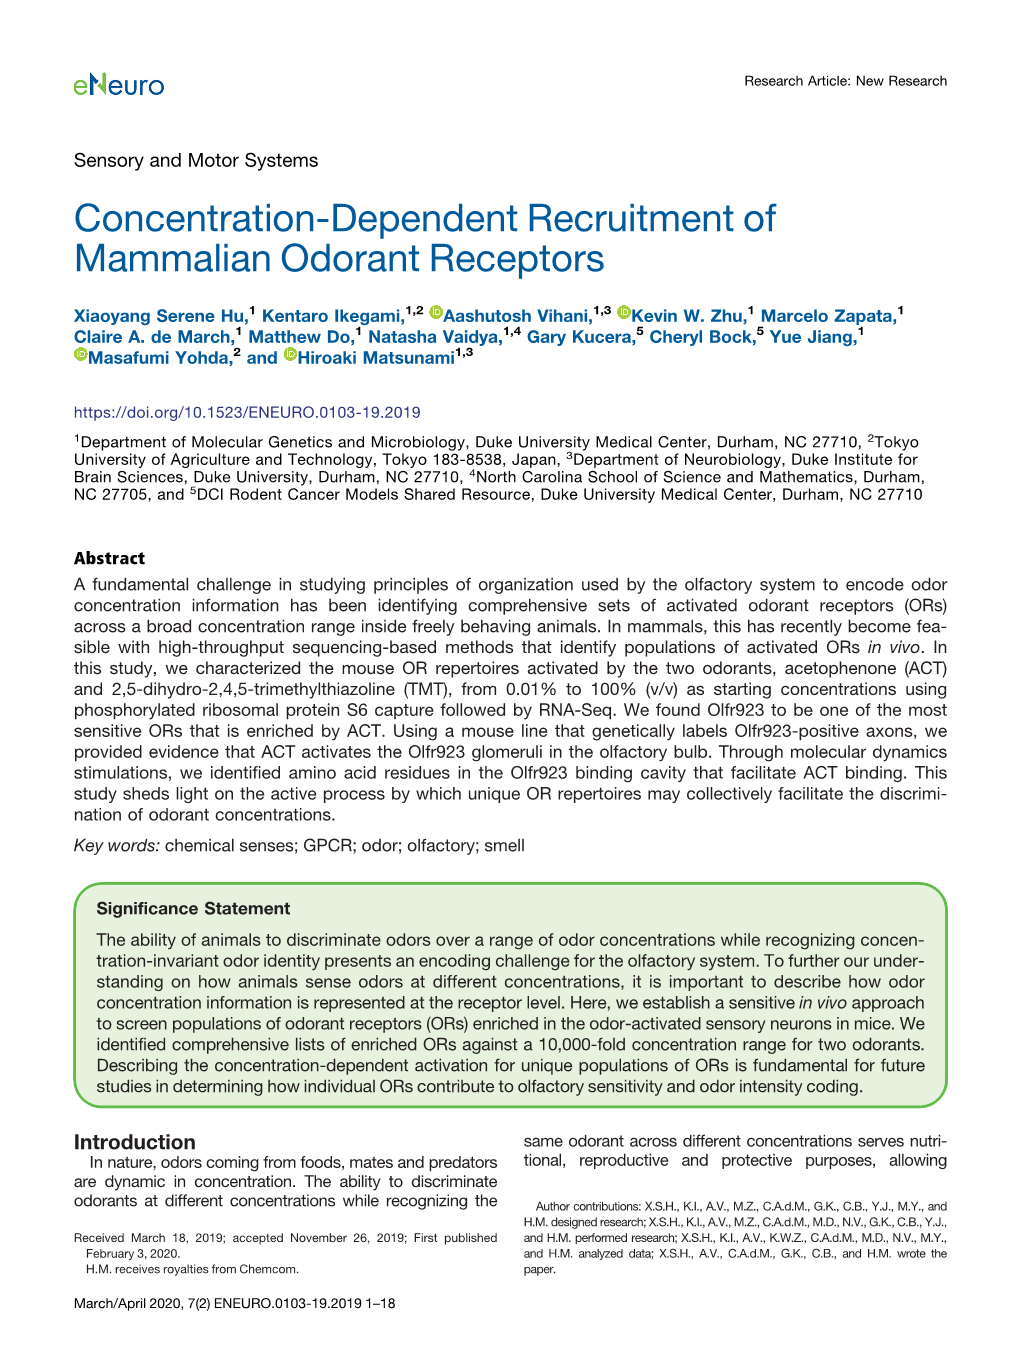 Concentration-Dependent Recruitment of Mammalian Odorant Receptors